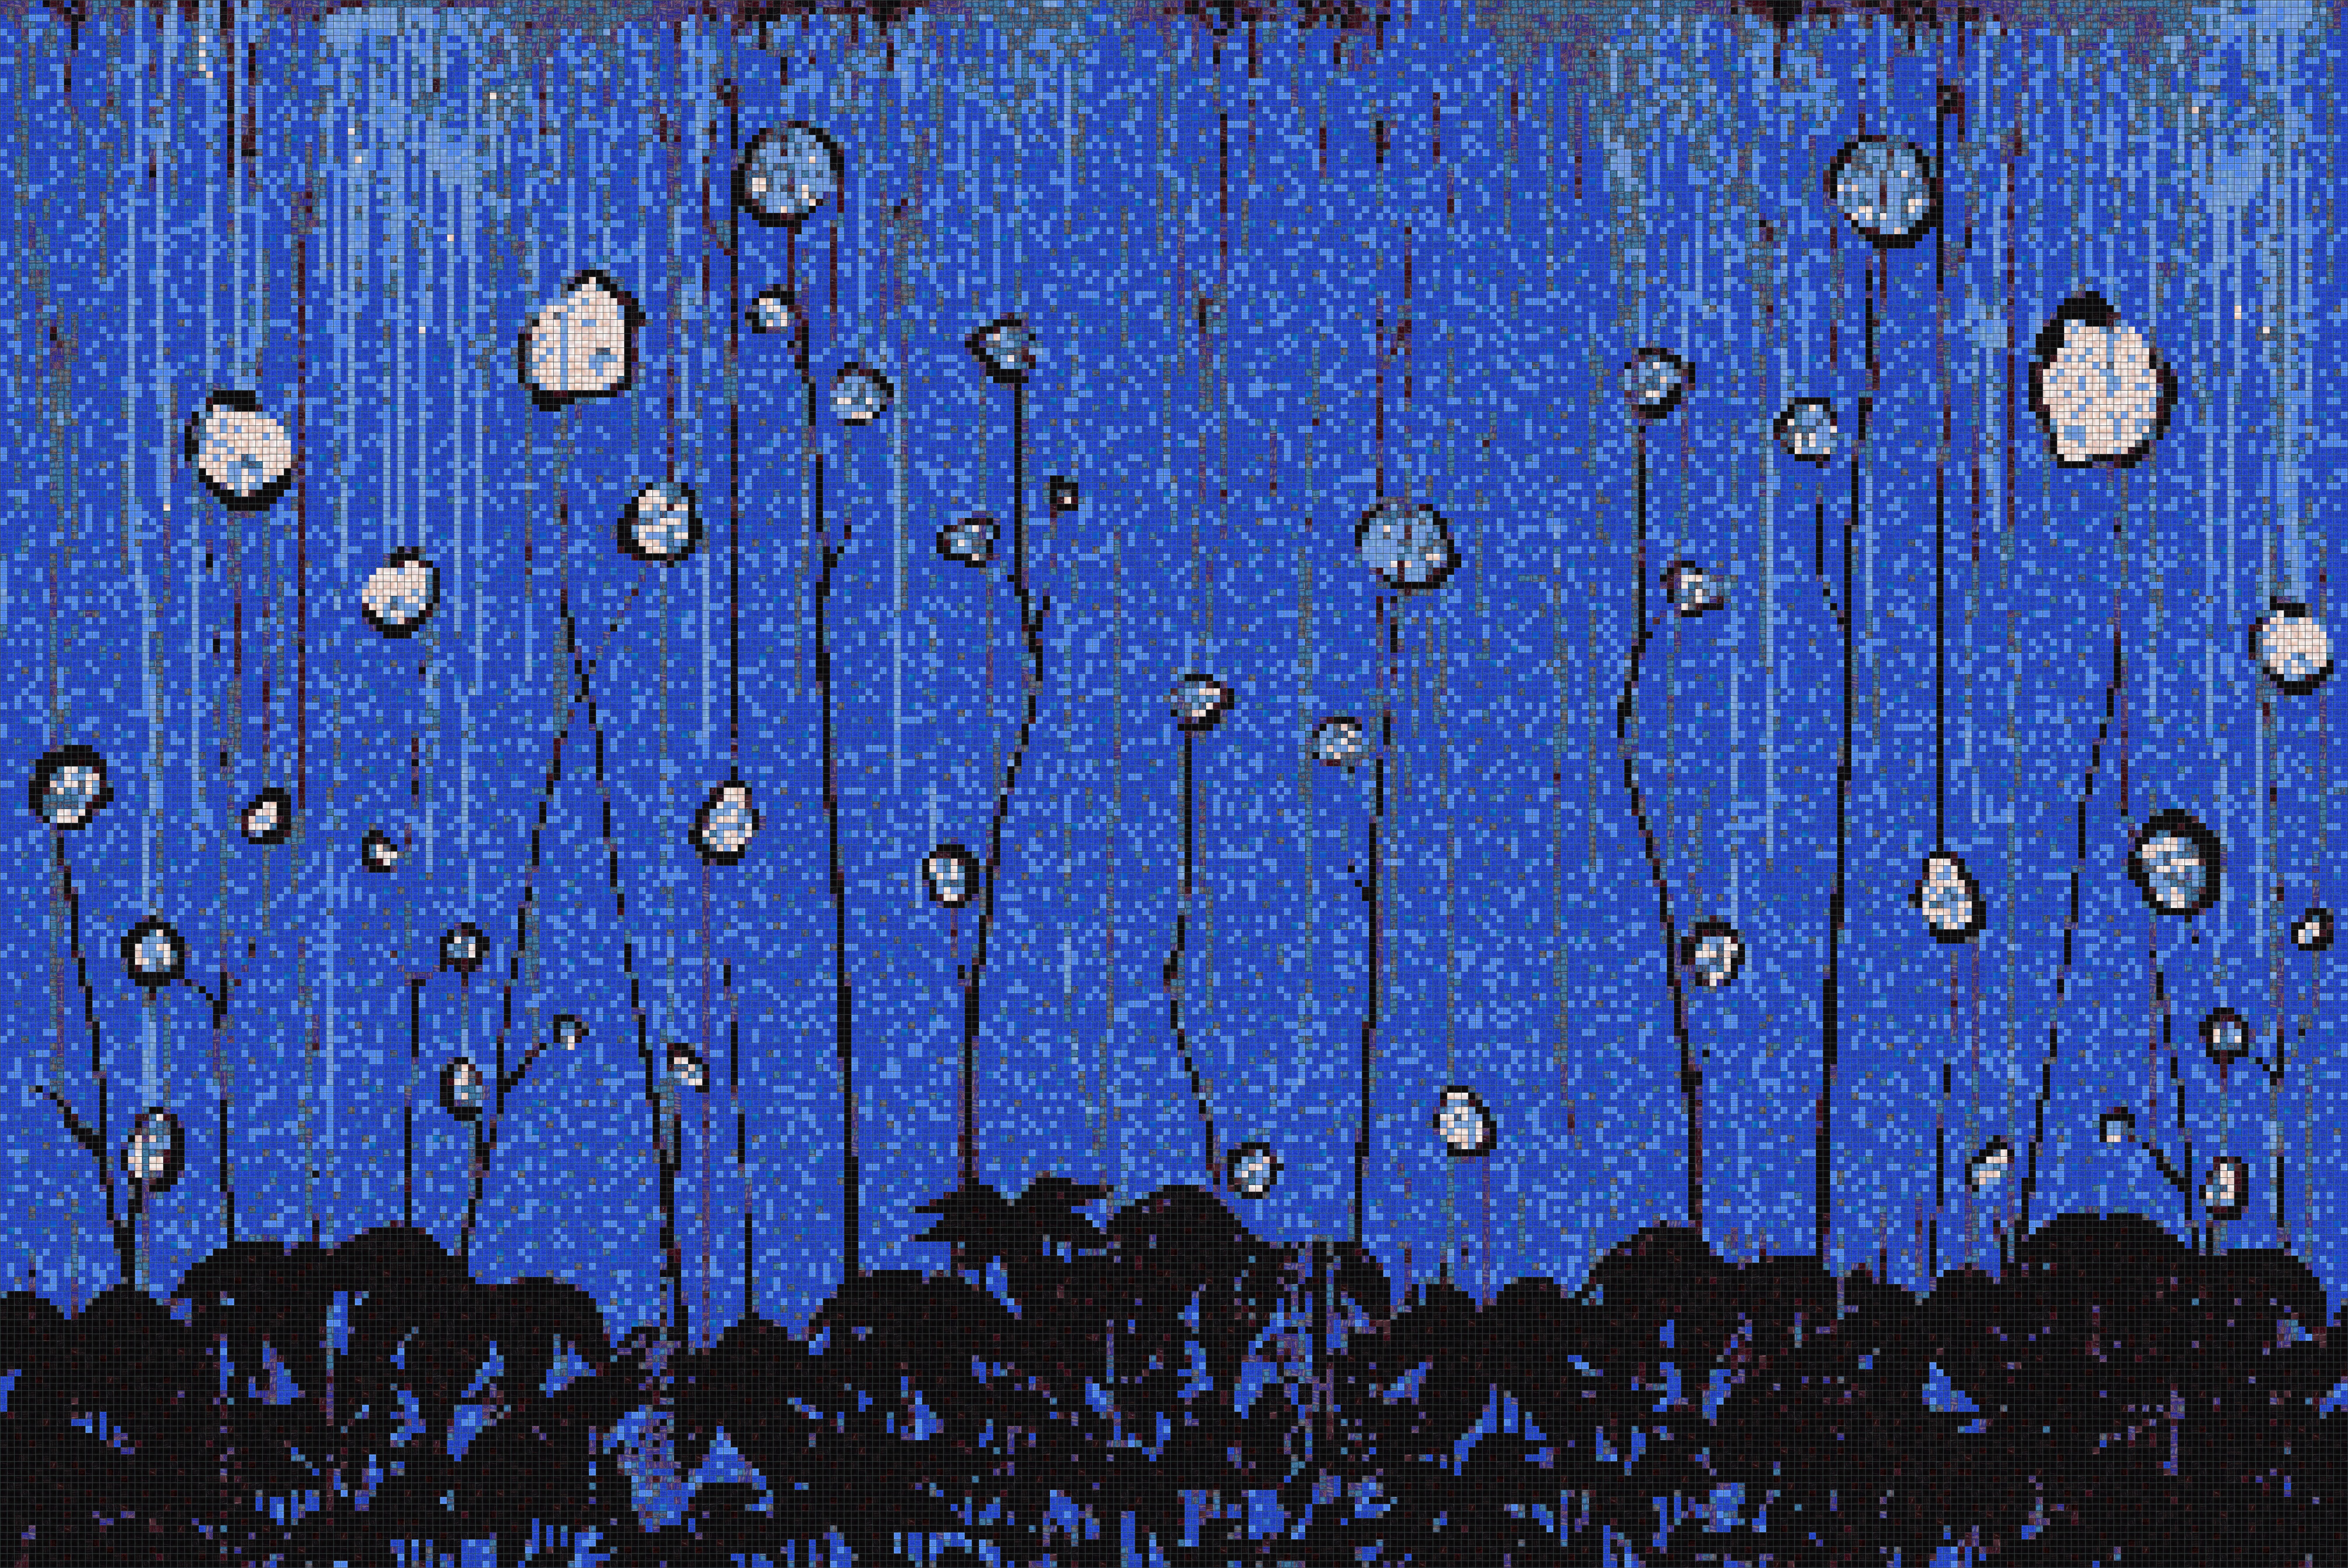 Gogh Away! Cerulean Blue Lively Tile Mural By Artaic